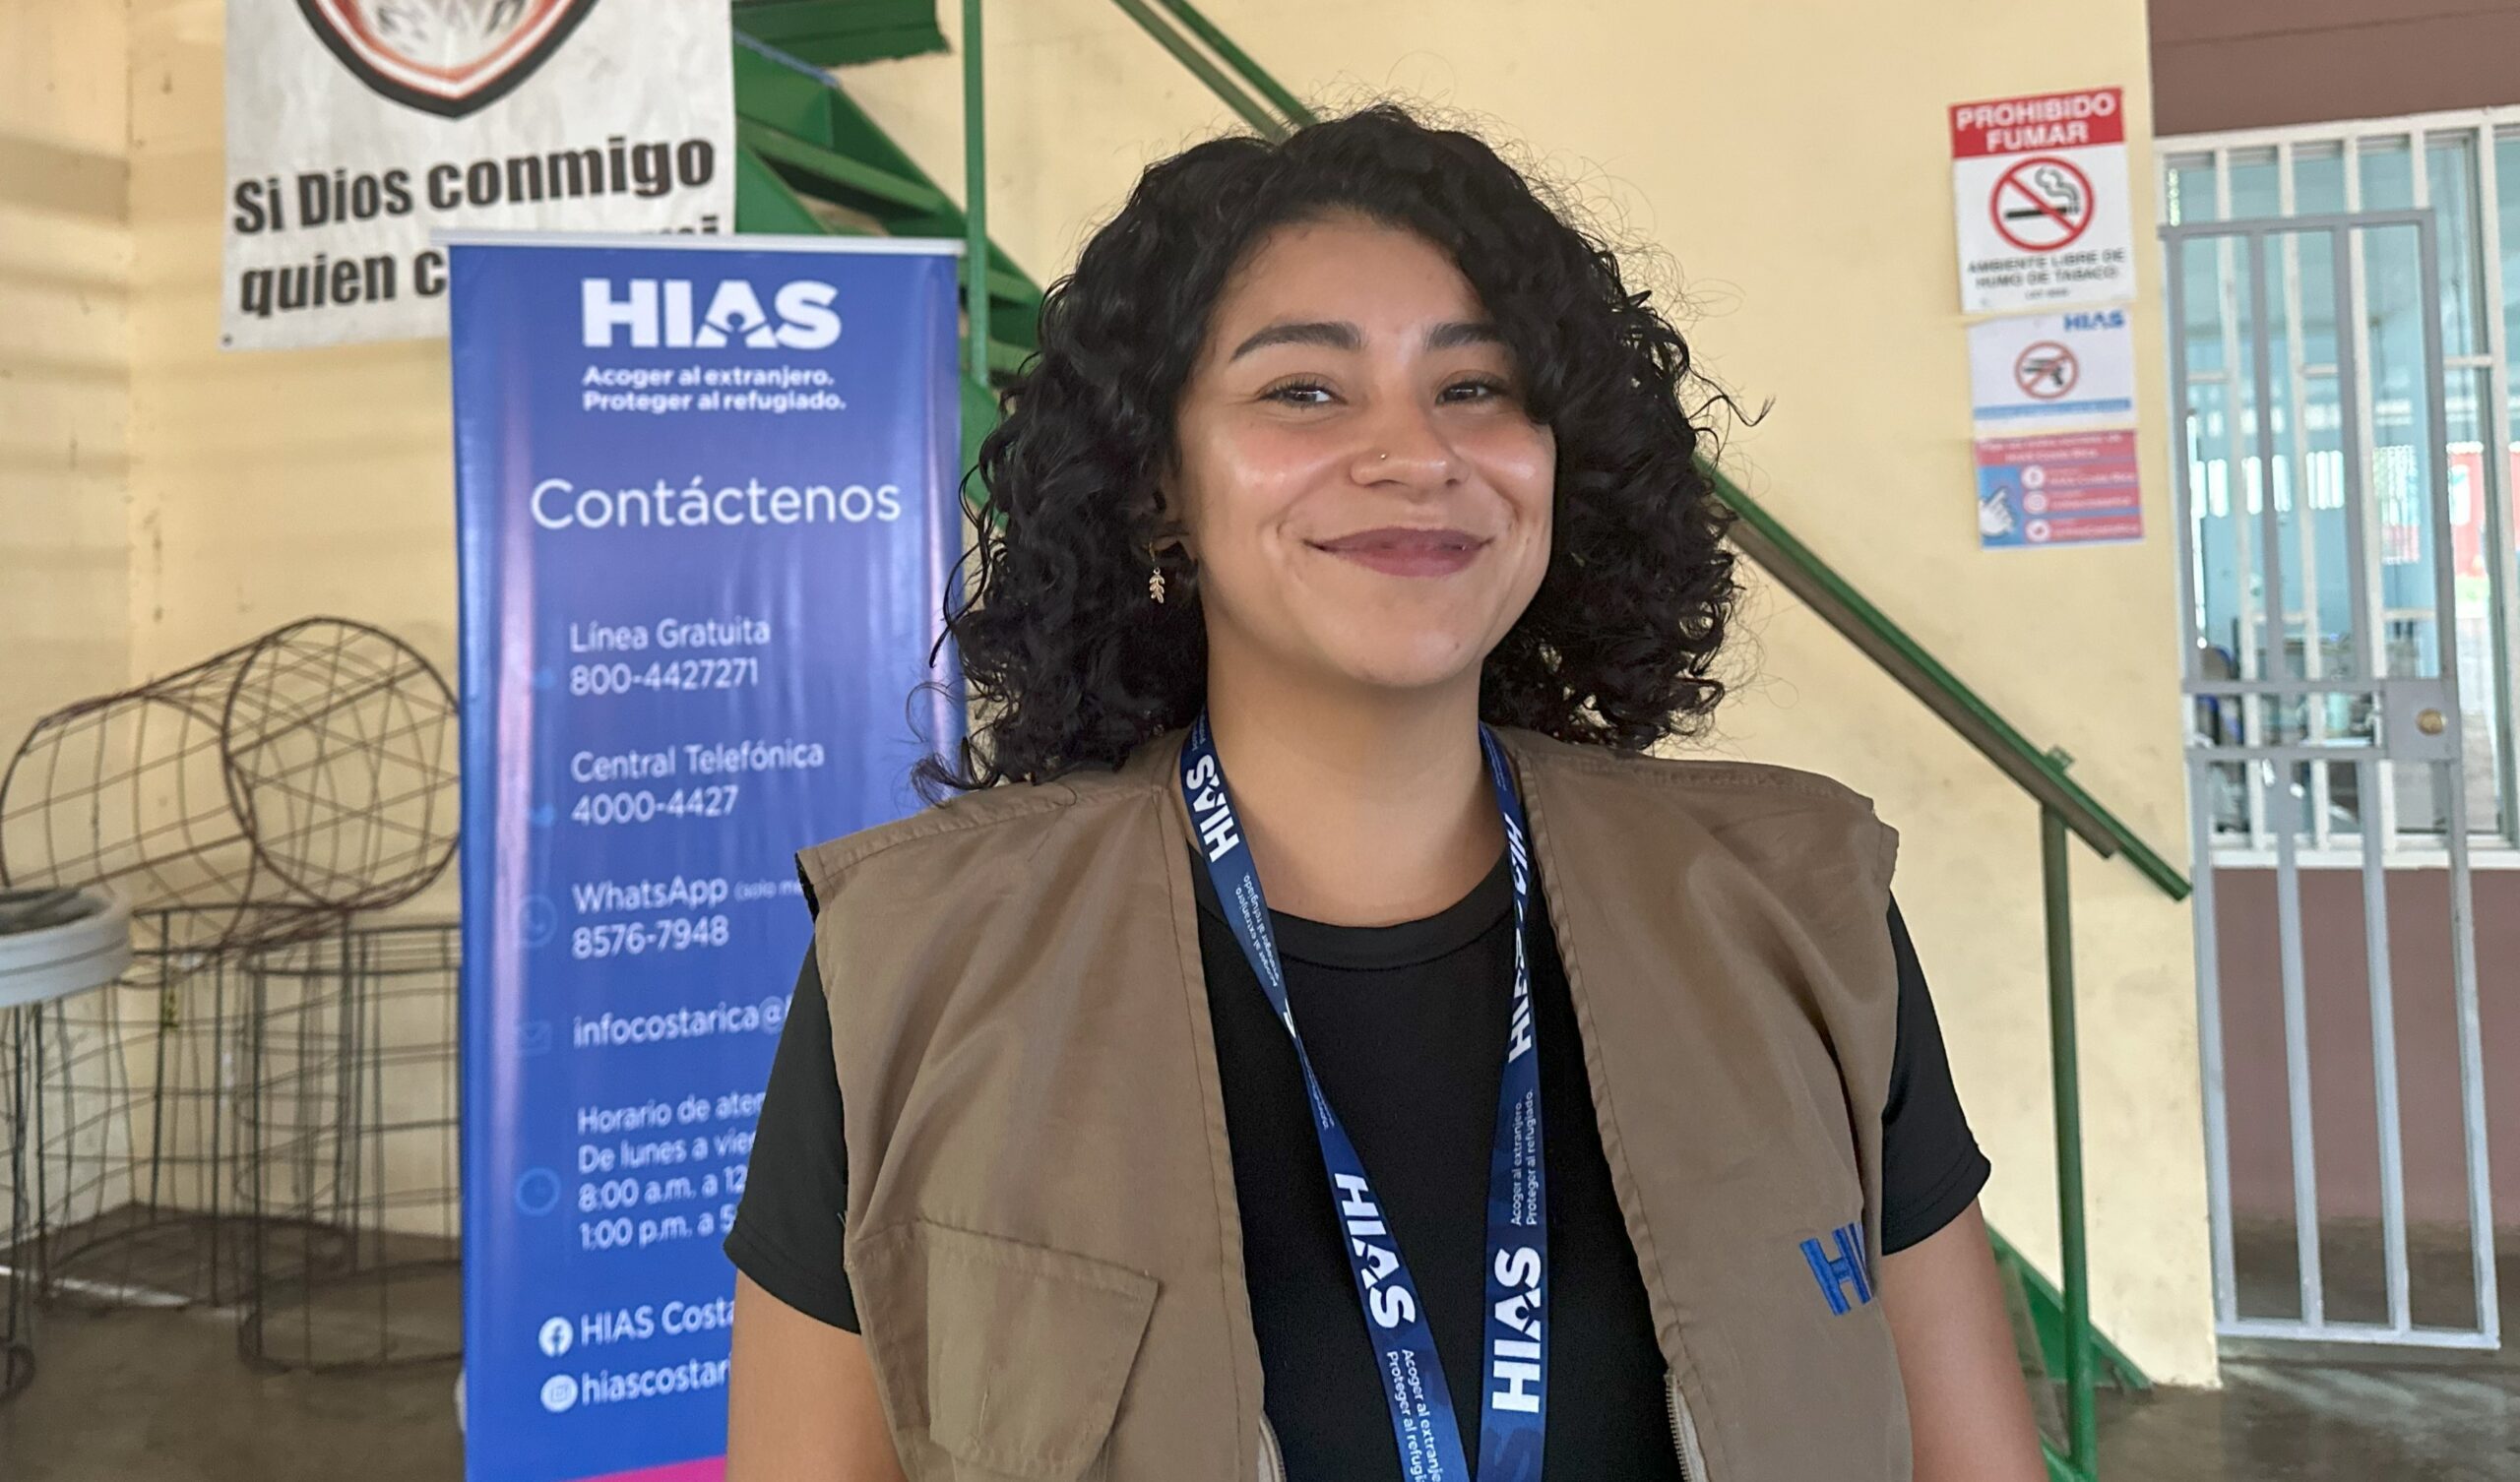 Meet Costa Rica’s GBV Expert, Jeacqueline Ocampo